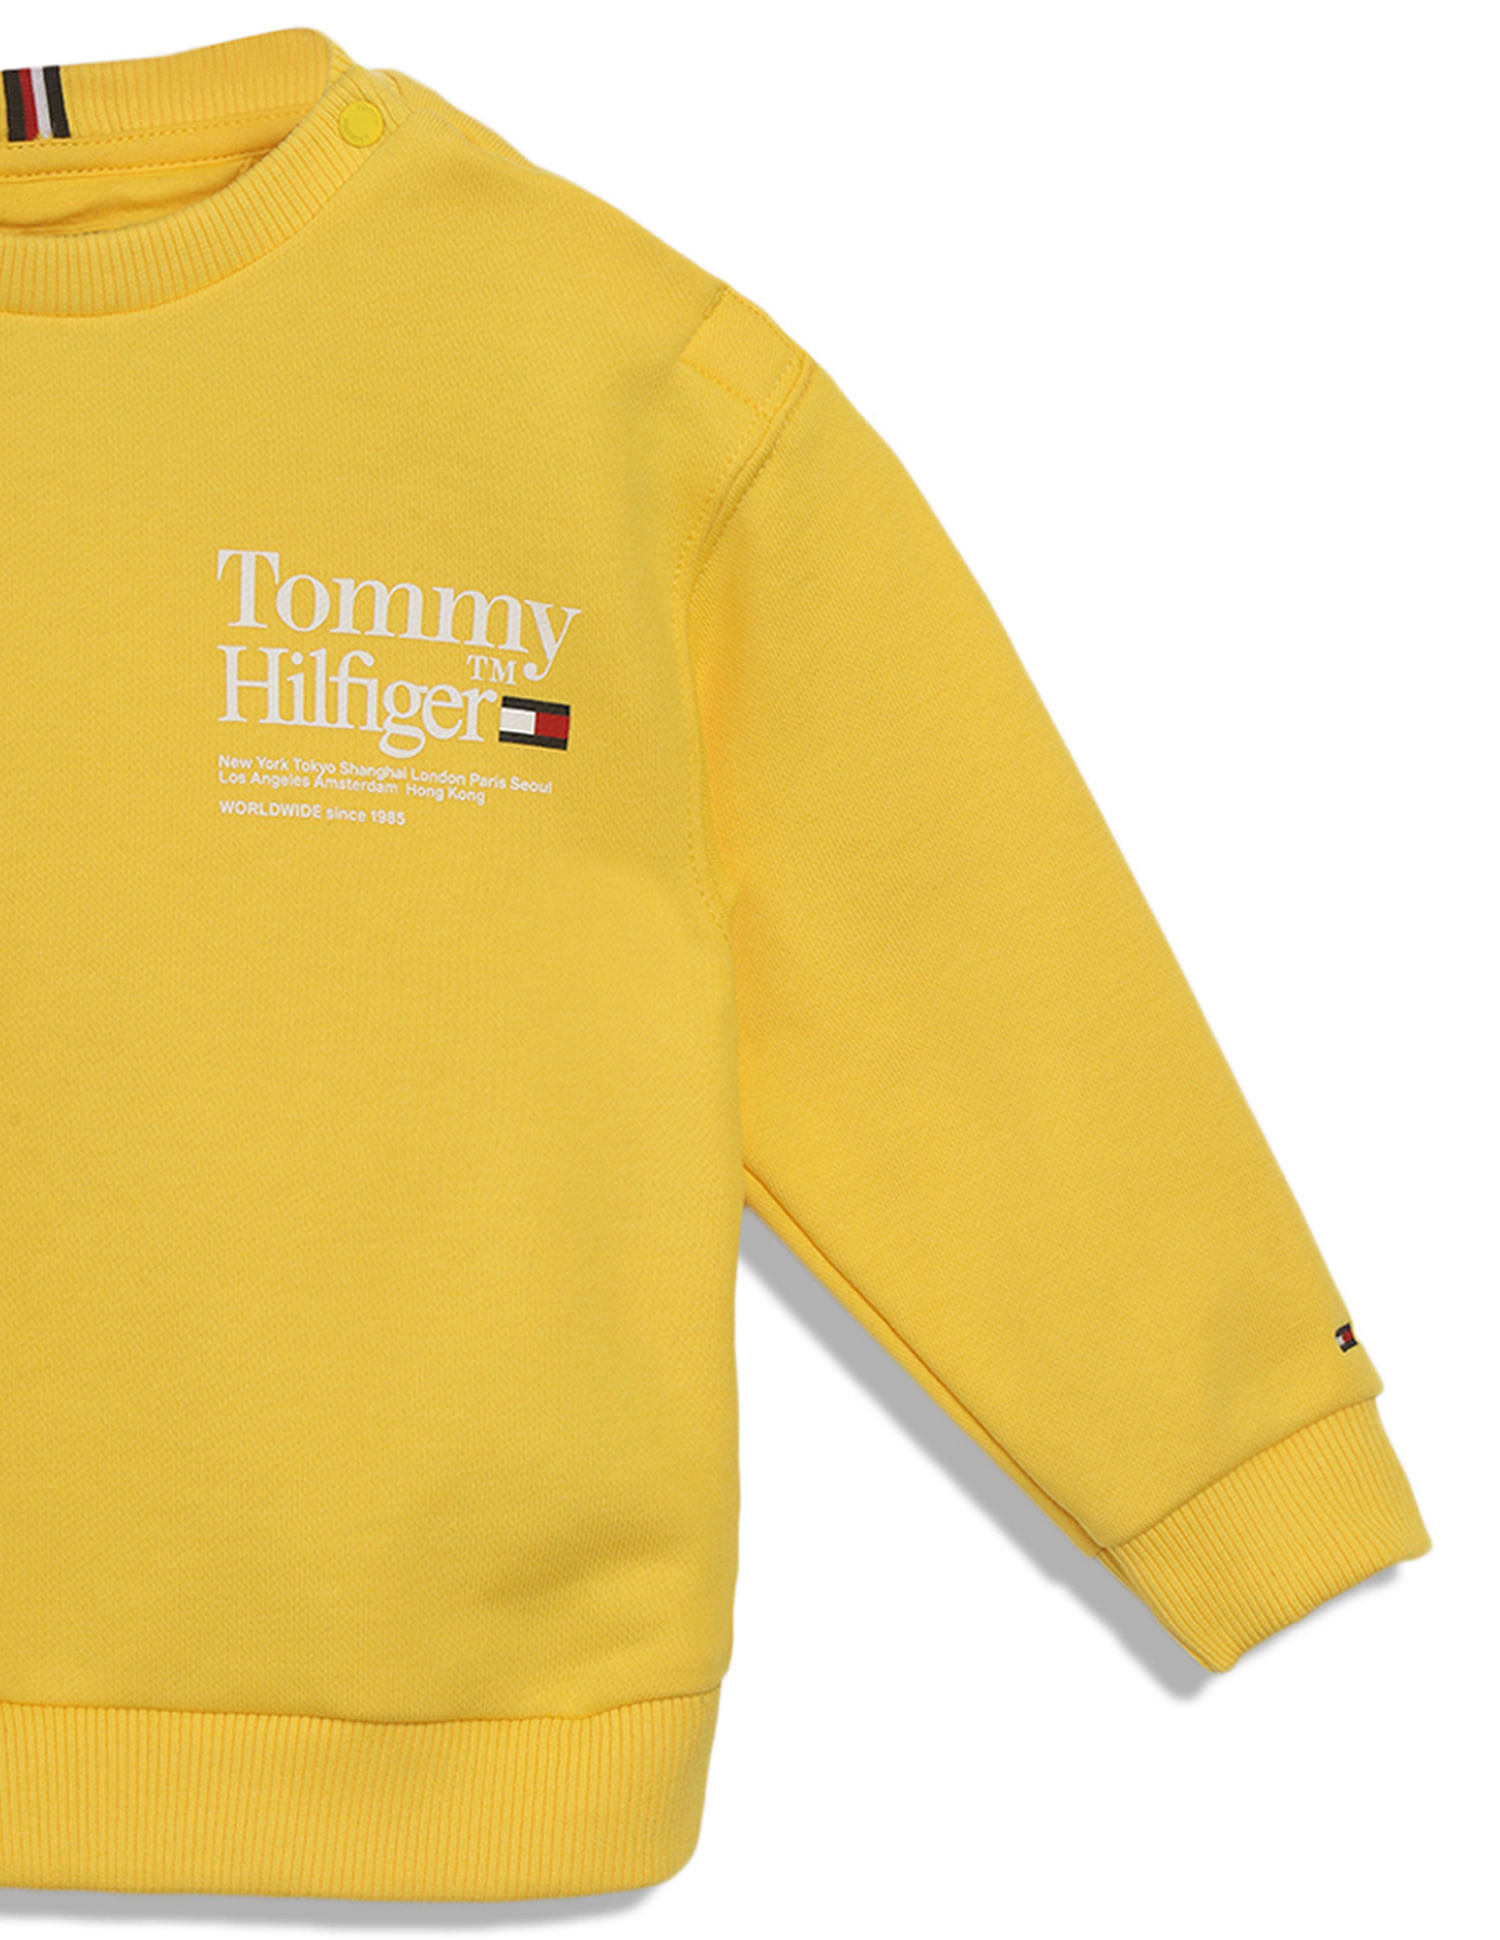 Buy Tommy Hilfiger Kids Boys Cotton Sweatshirt Solid Transitional